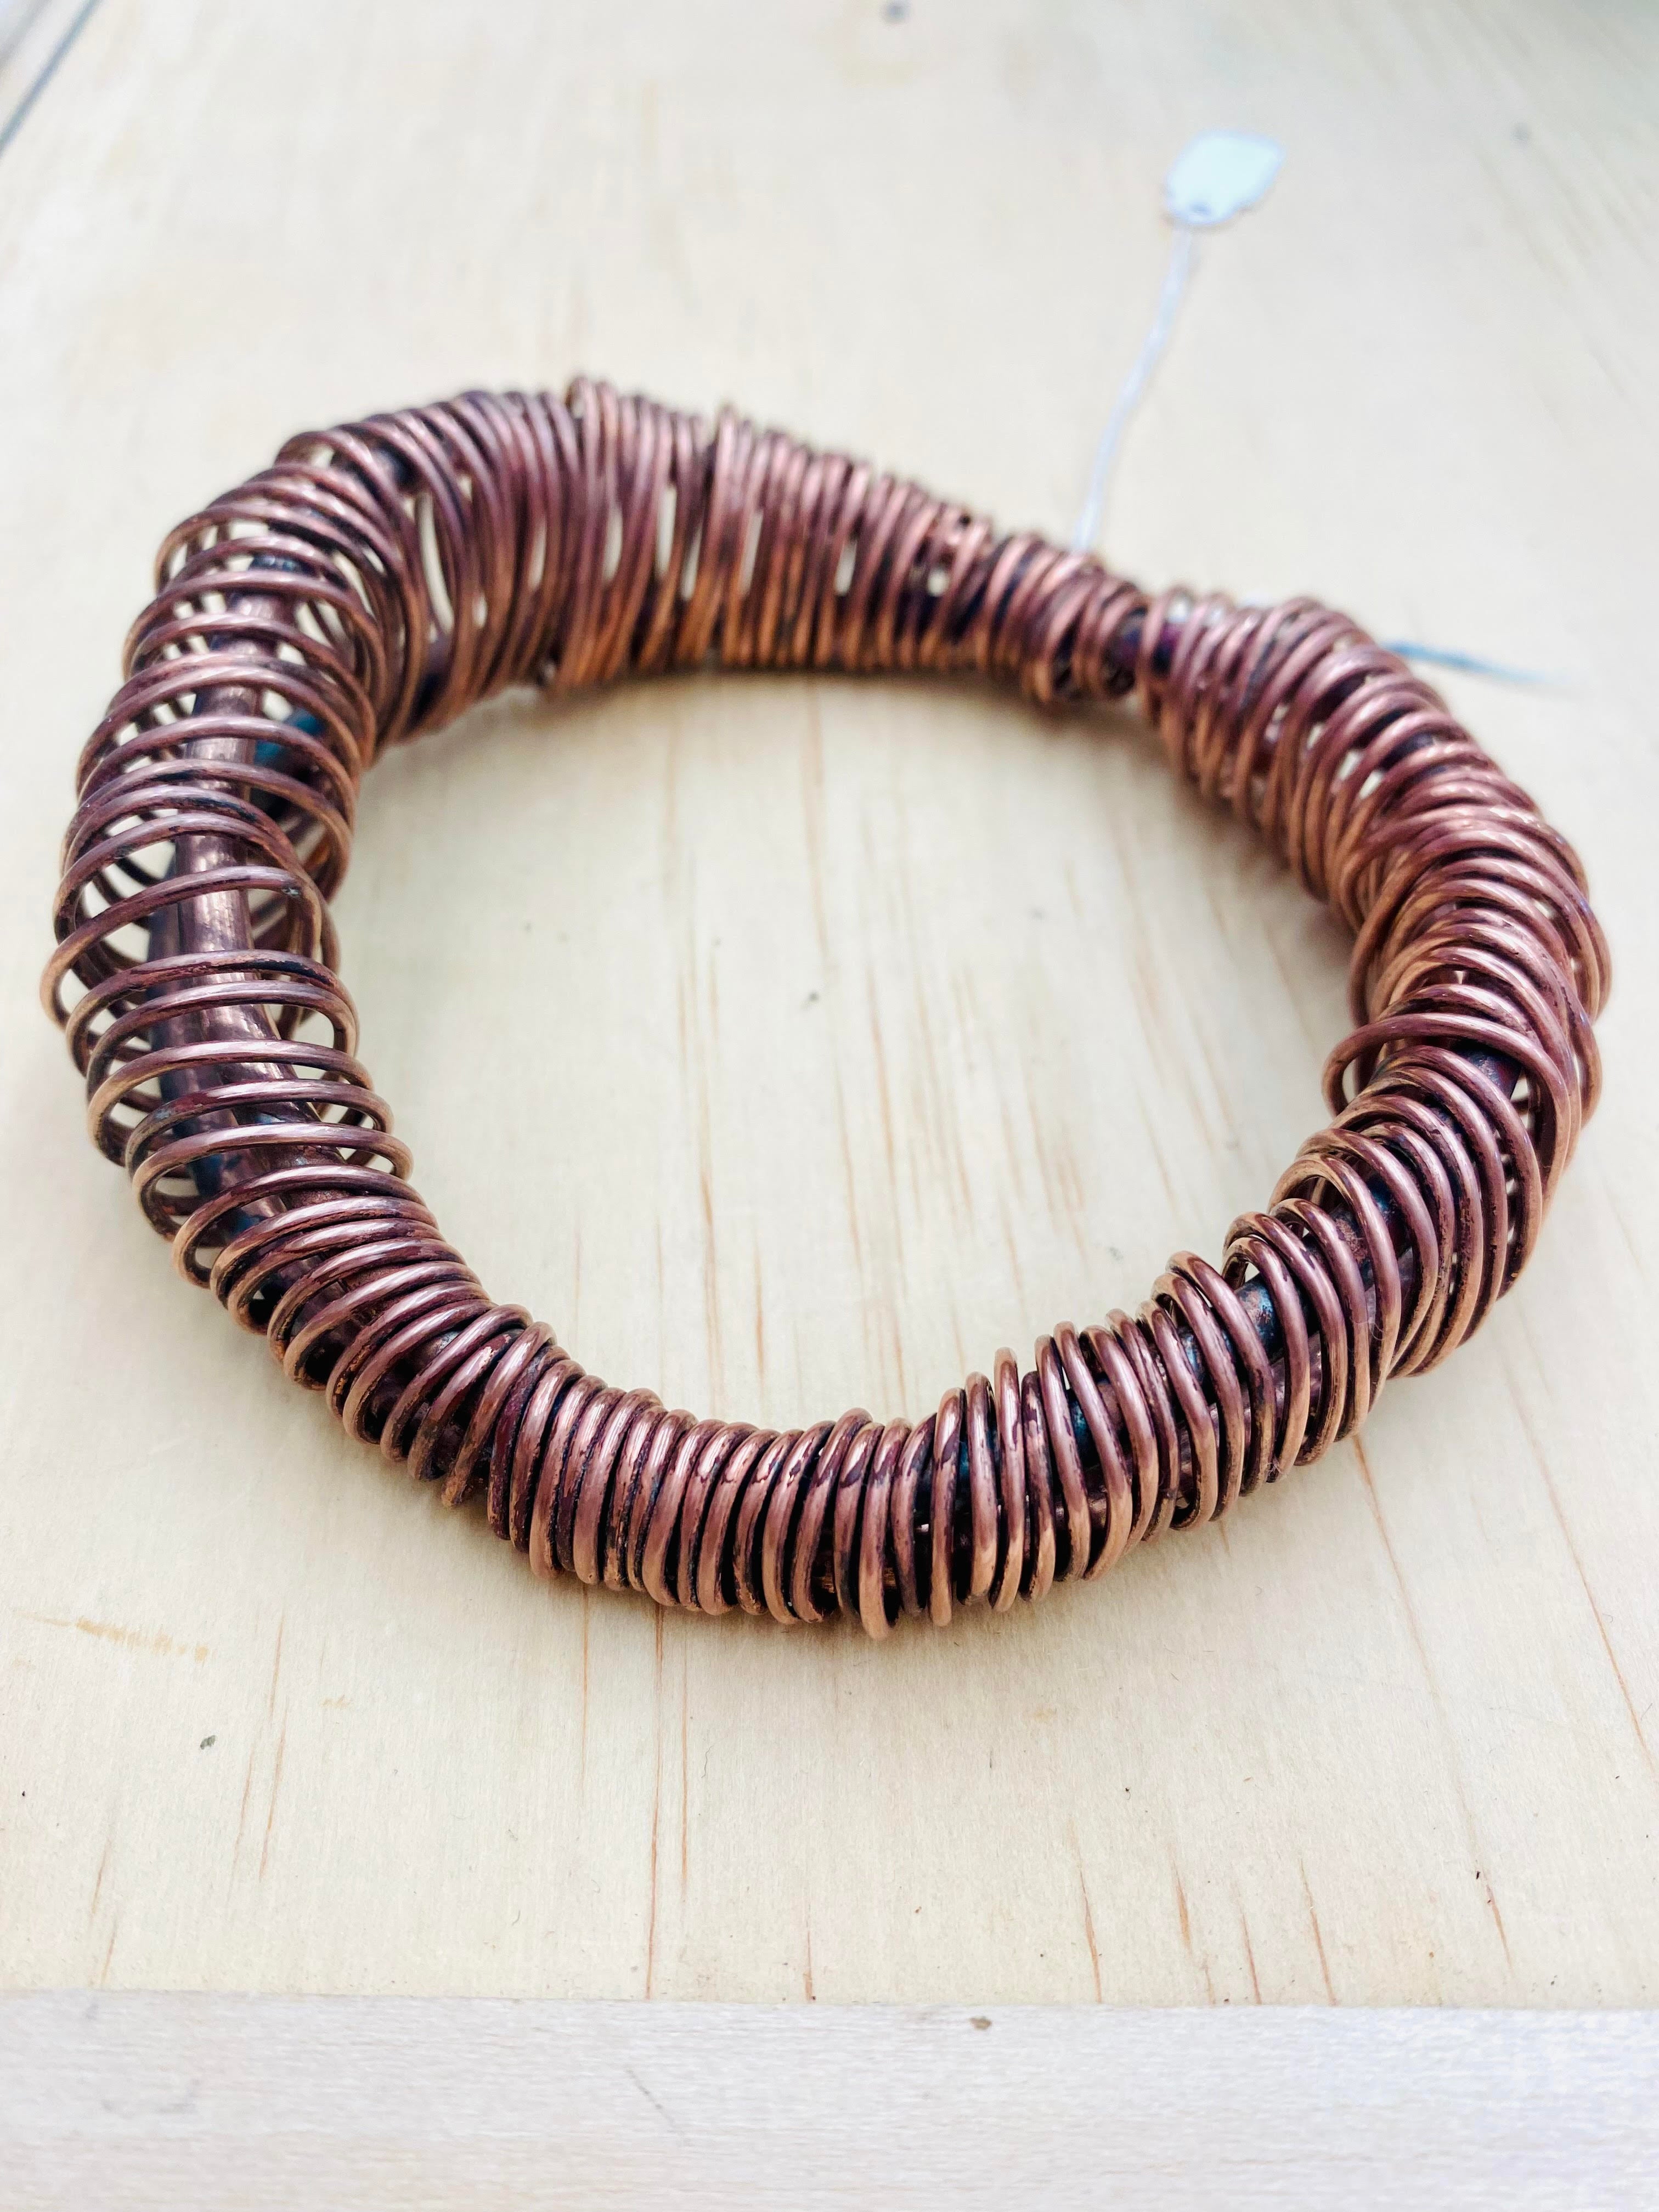 Copper Spiral bracelet by John Meyer